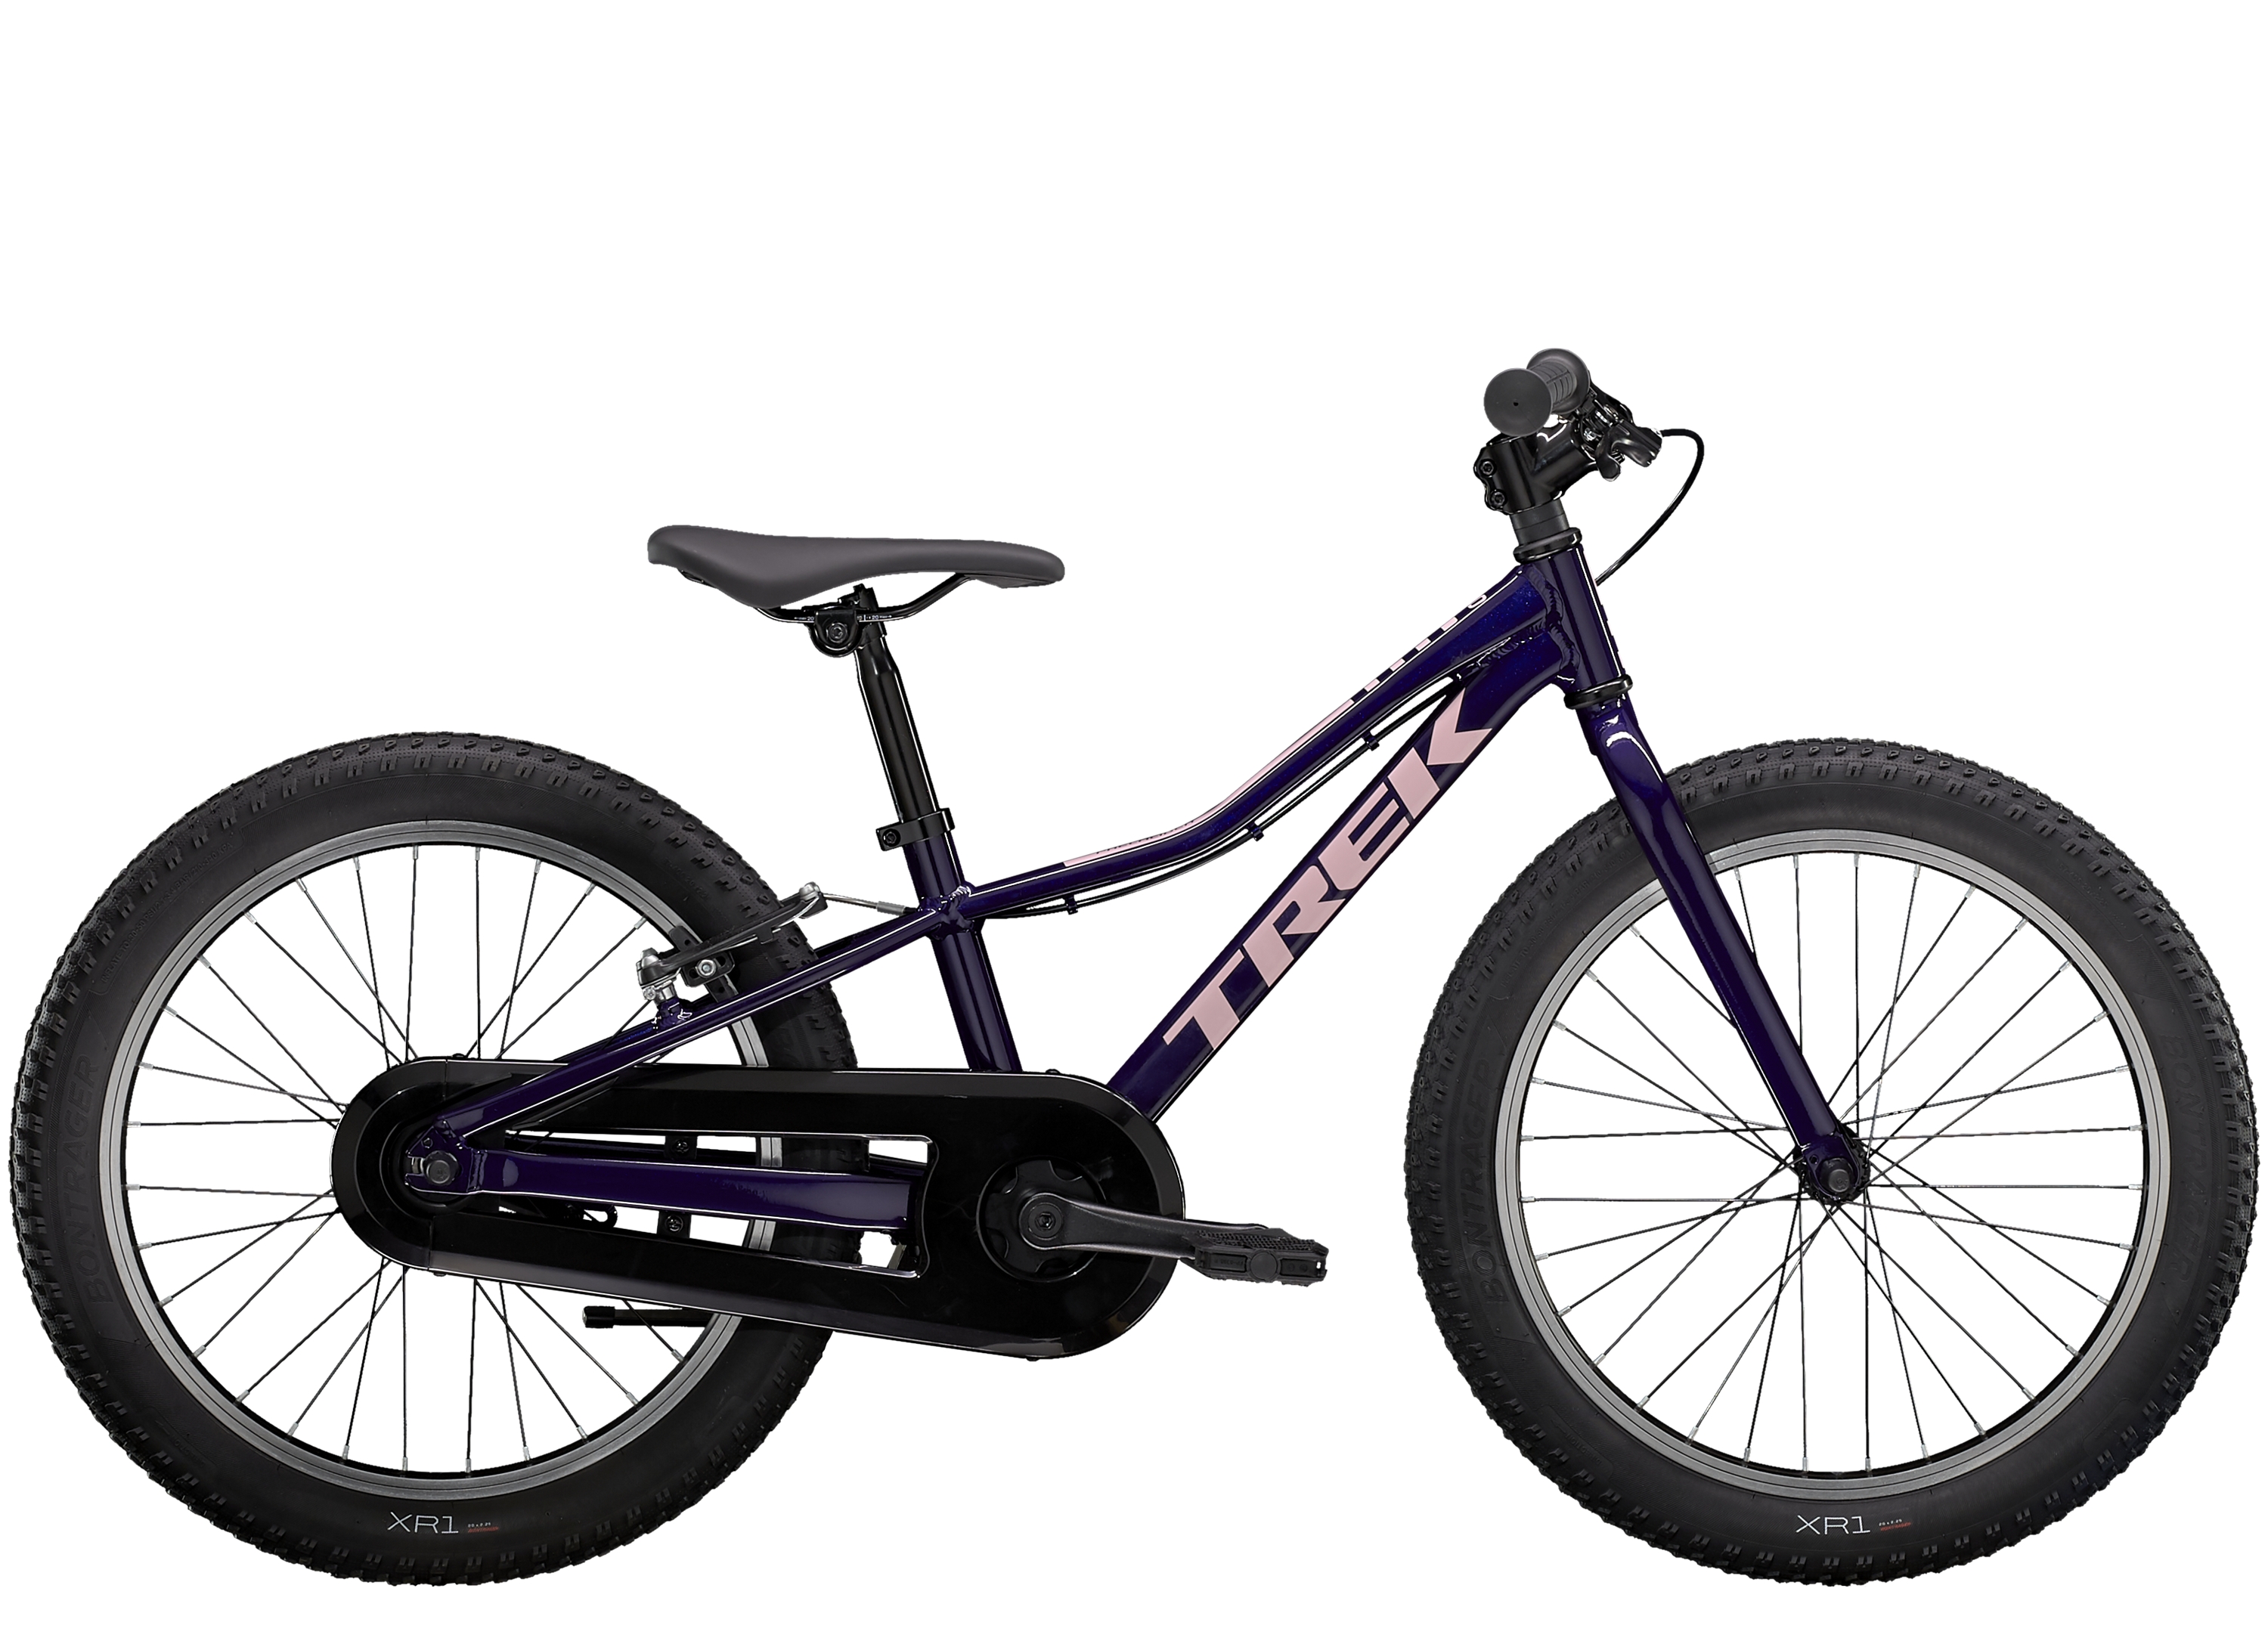 purple trek mountain bike